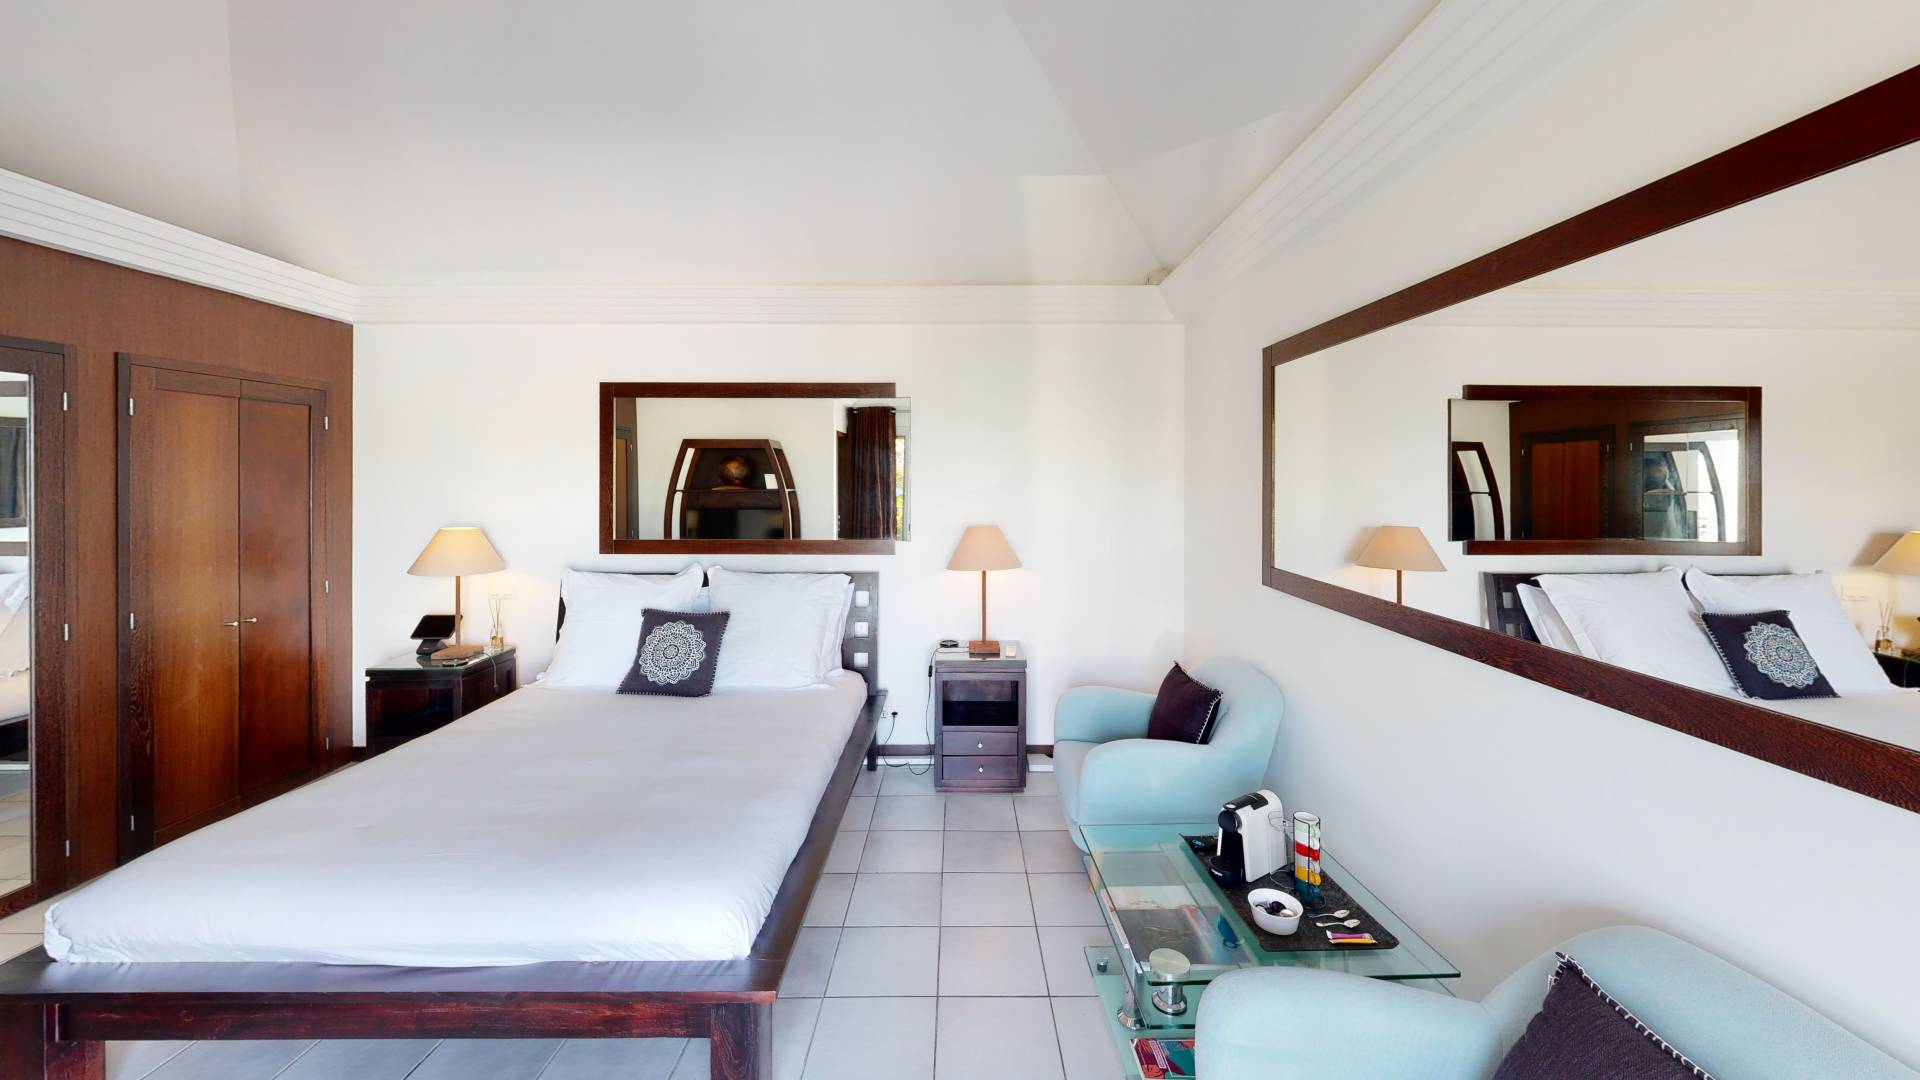 Villa Panama Bedroom 2